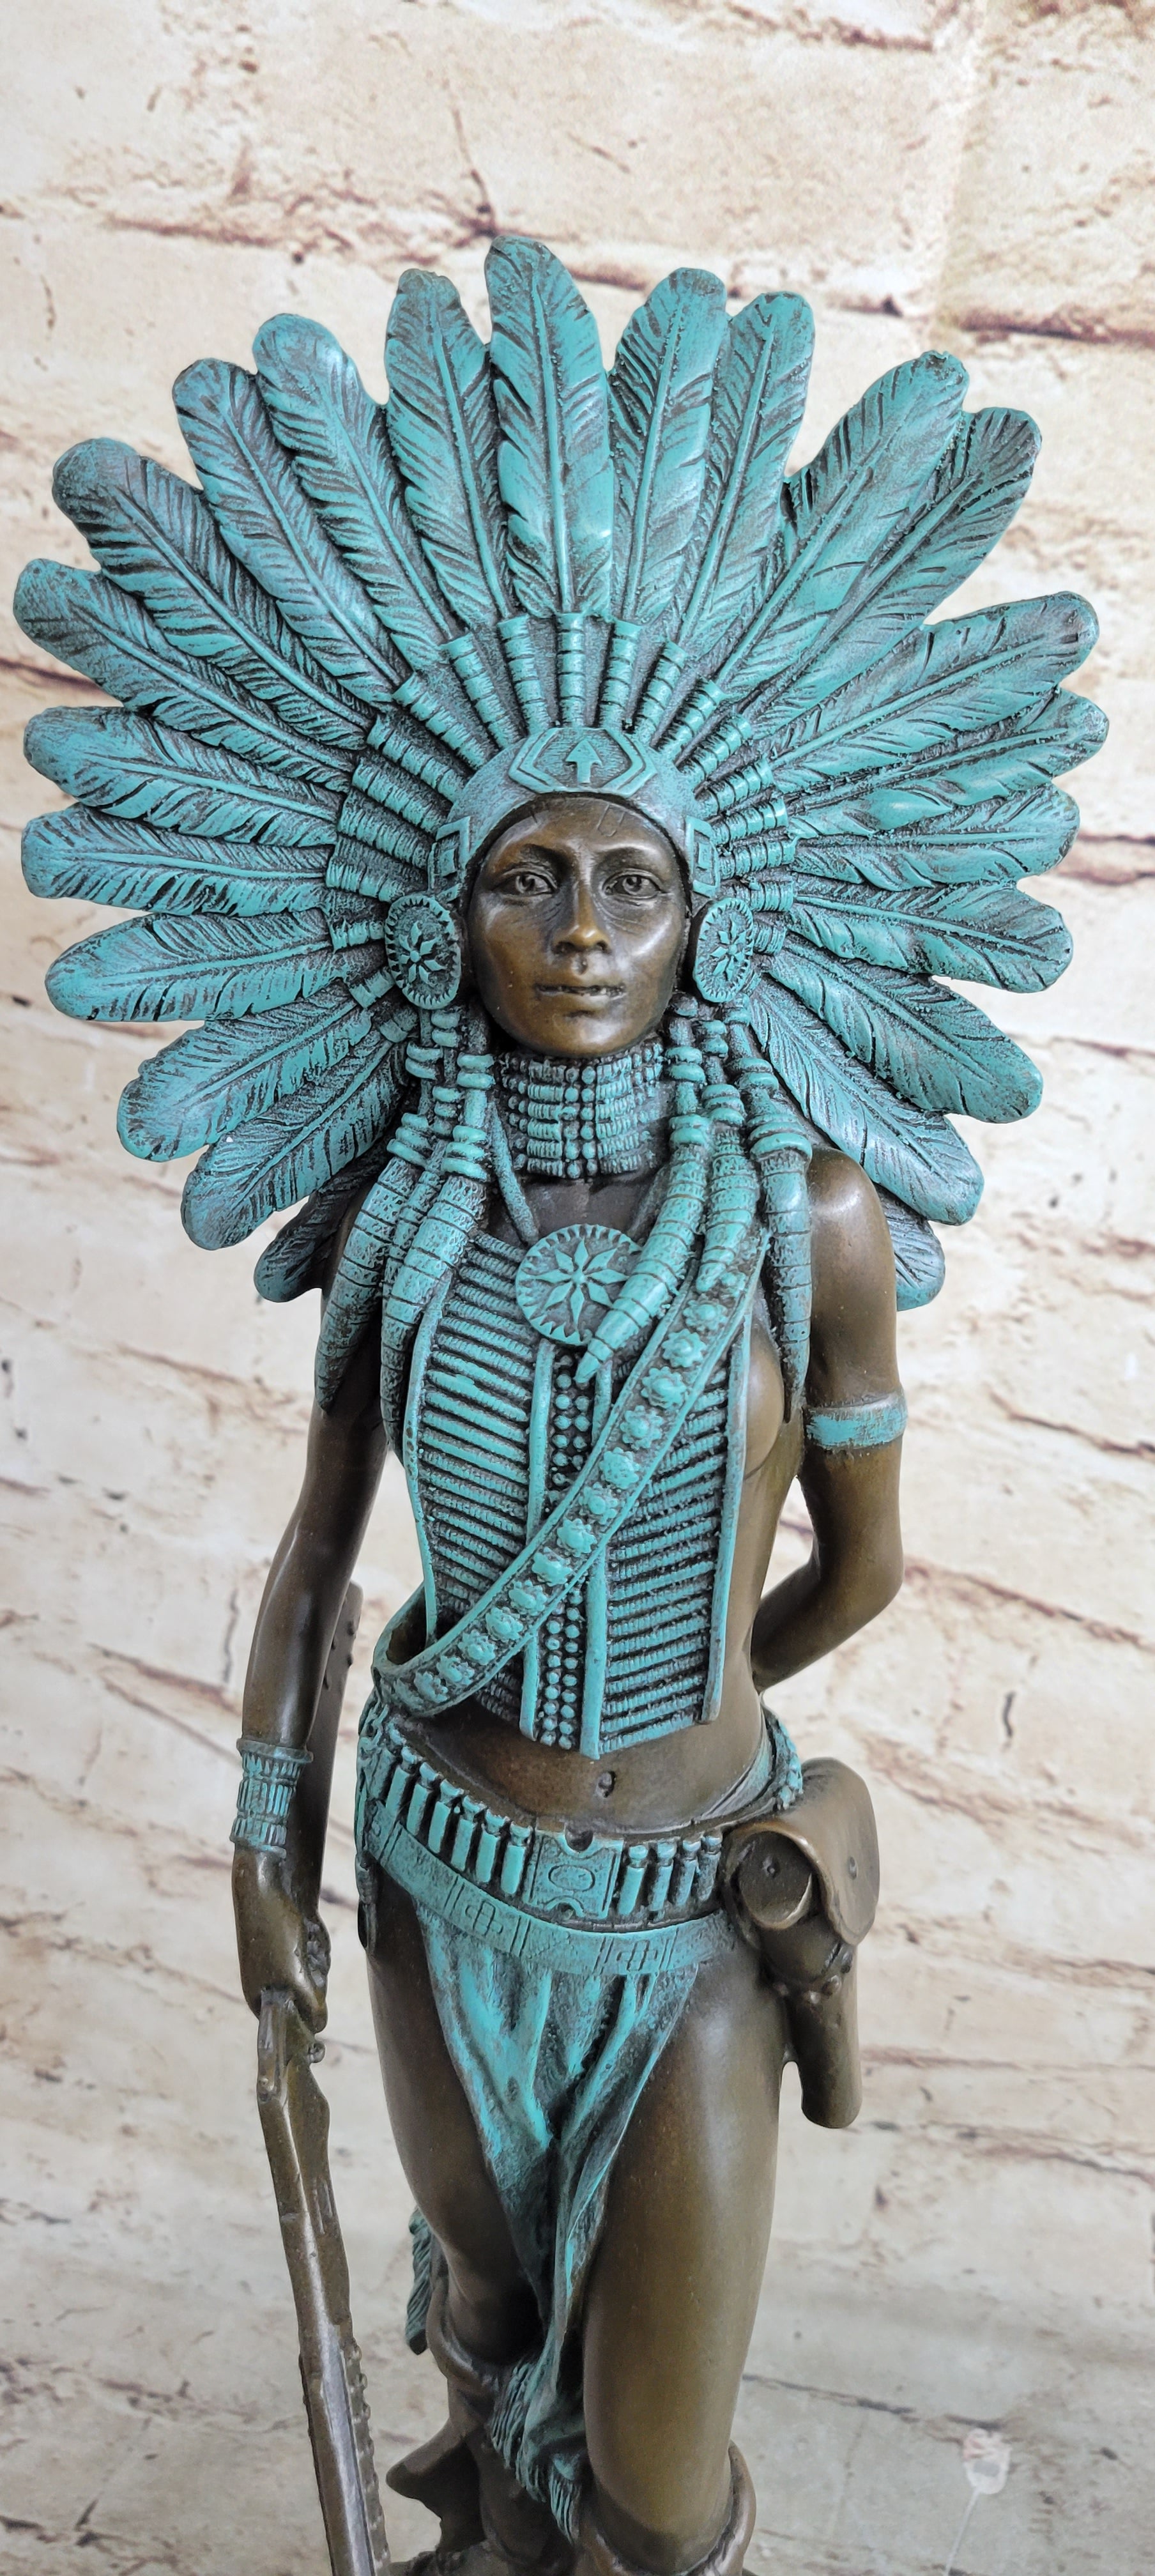 RARE Vintage Armor Bronze Native American Indian Warrior With Gun Statue Figure